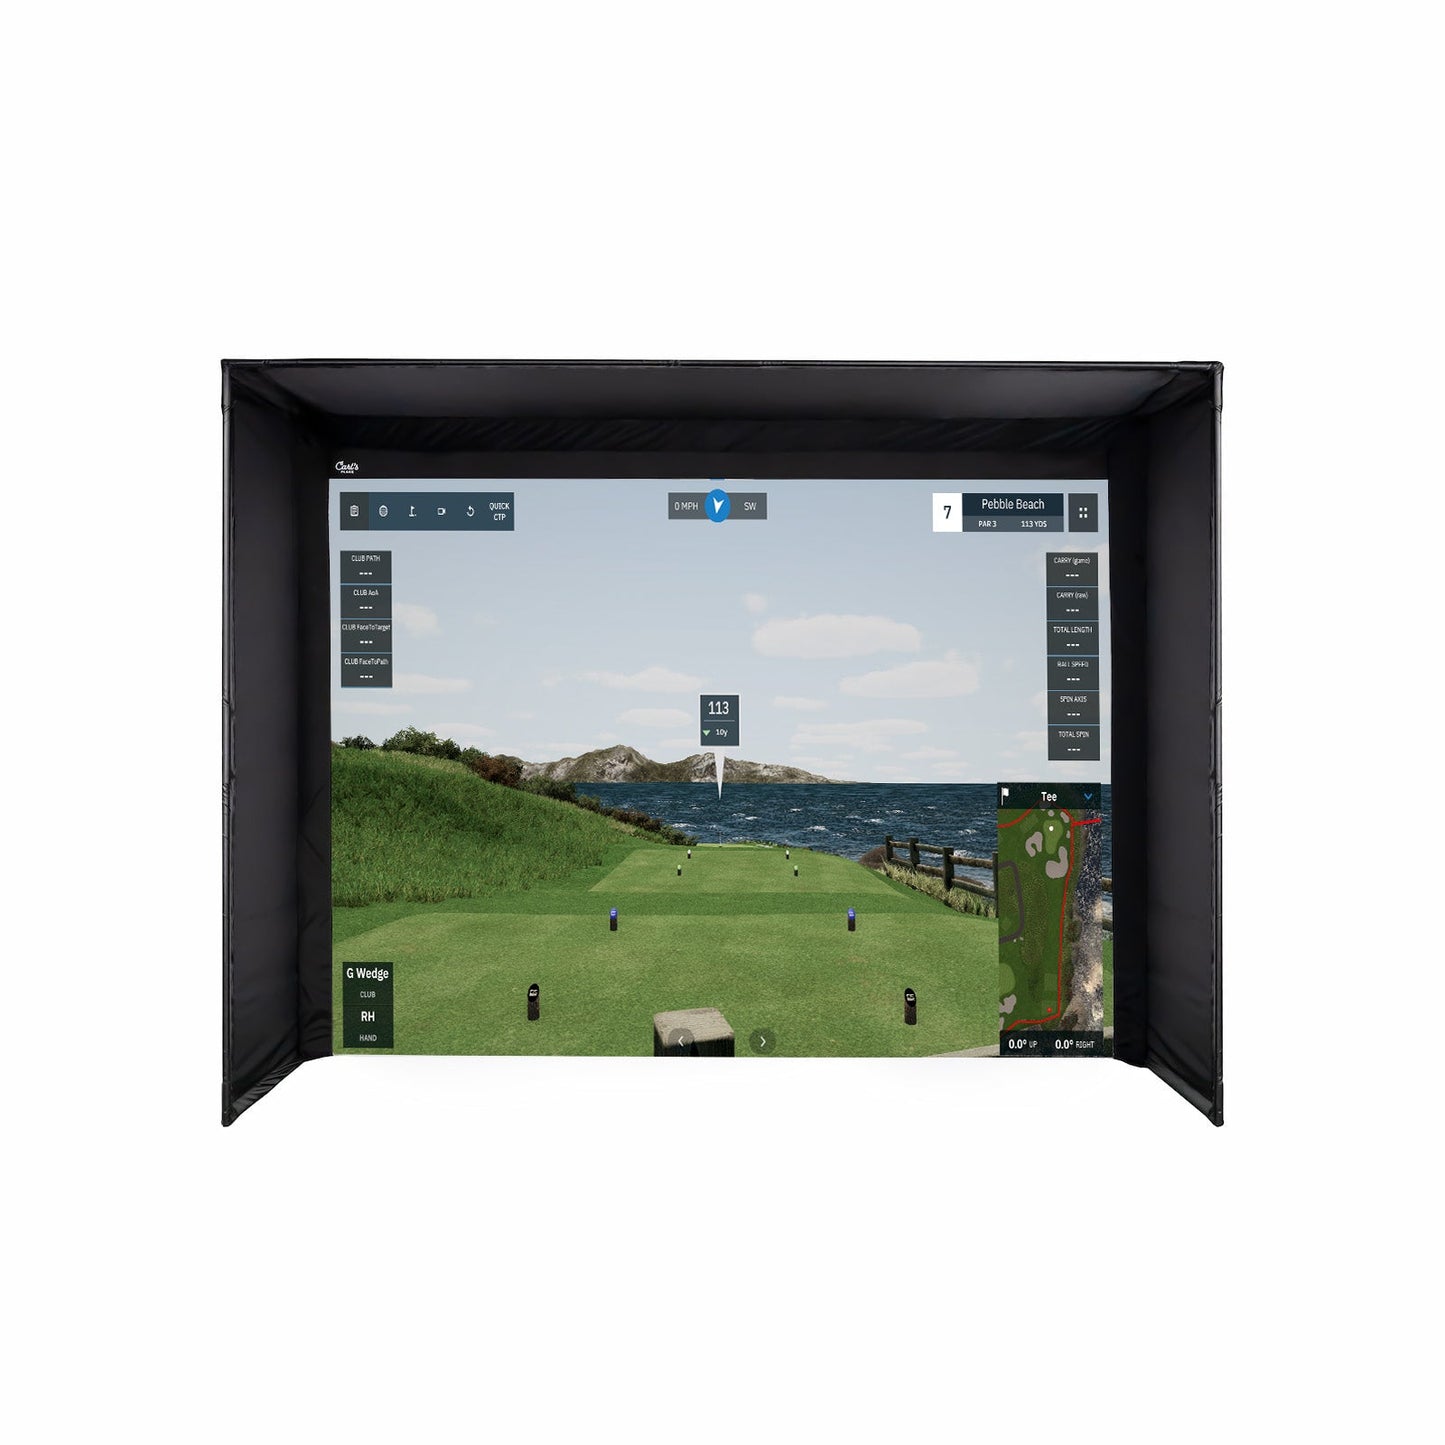 Carl's Place C-Series DIY Golf Simulator Enclosure Kit with Preferred Impact Screen - Big Horn Golfer